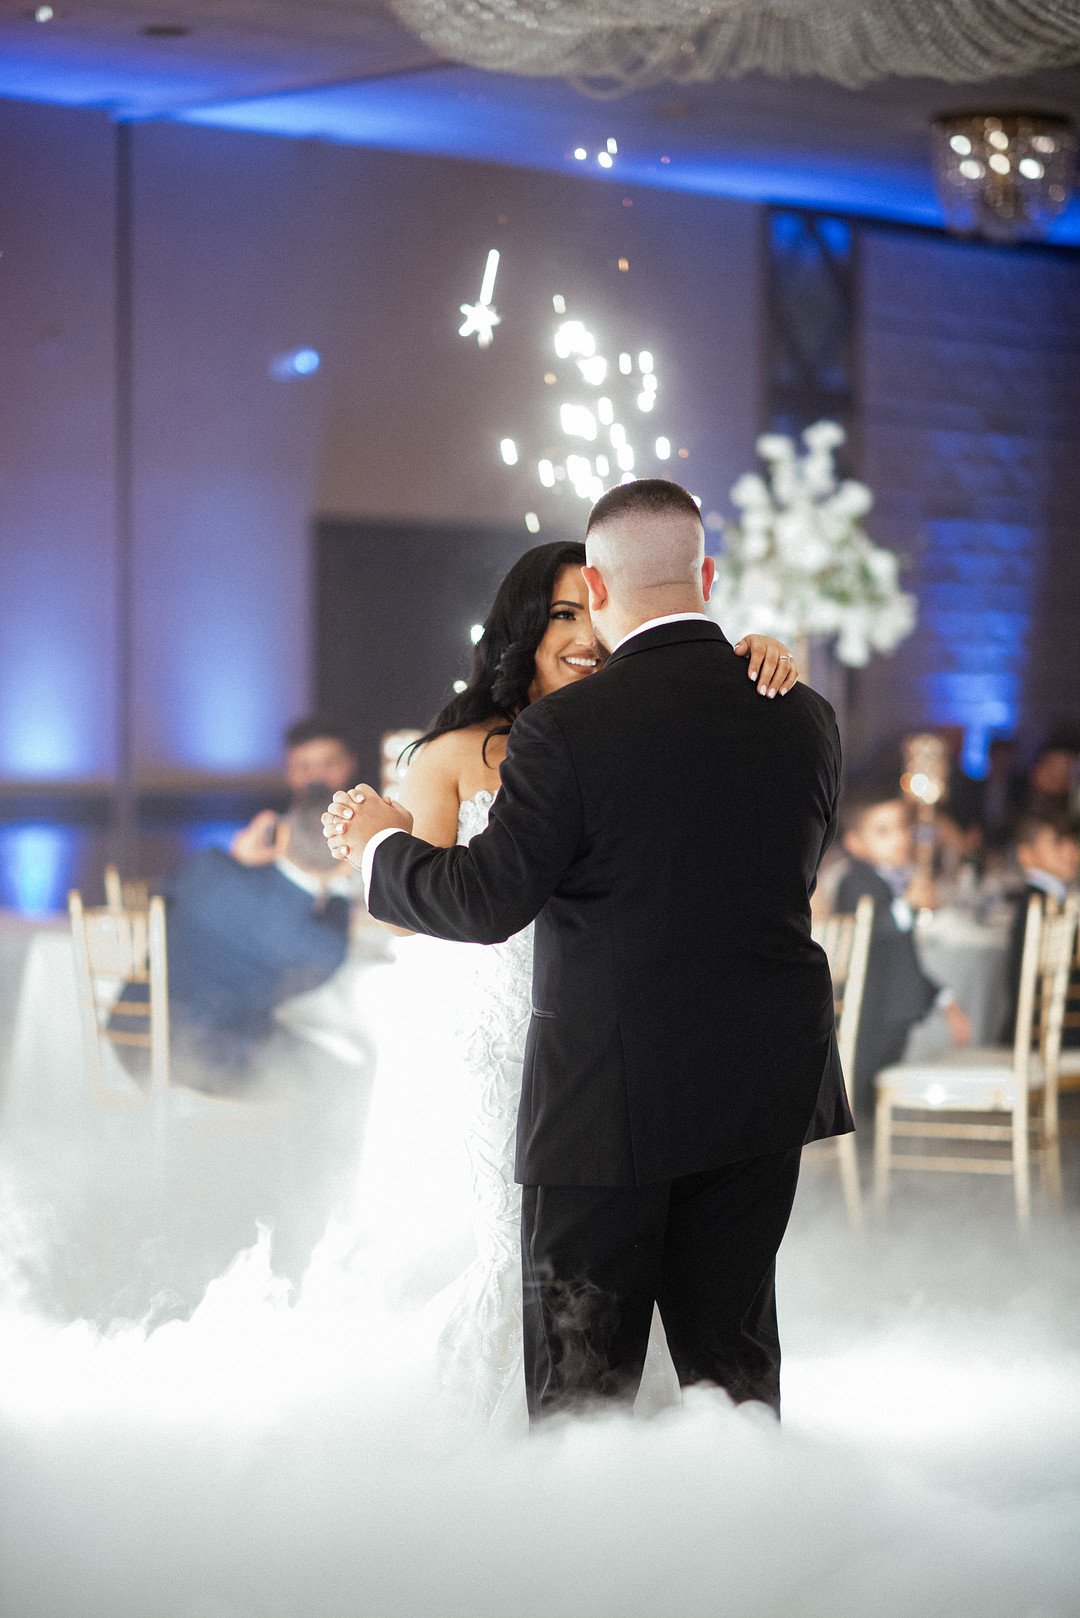 Youkhana_Jadou_Essi Photography_Rina-George-Assyrian-Wedding-Chicago-0236_low.jpg